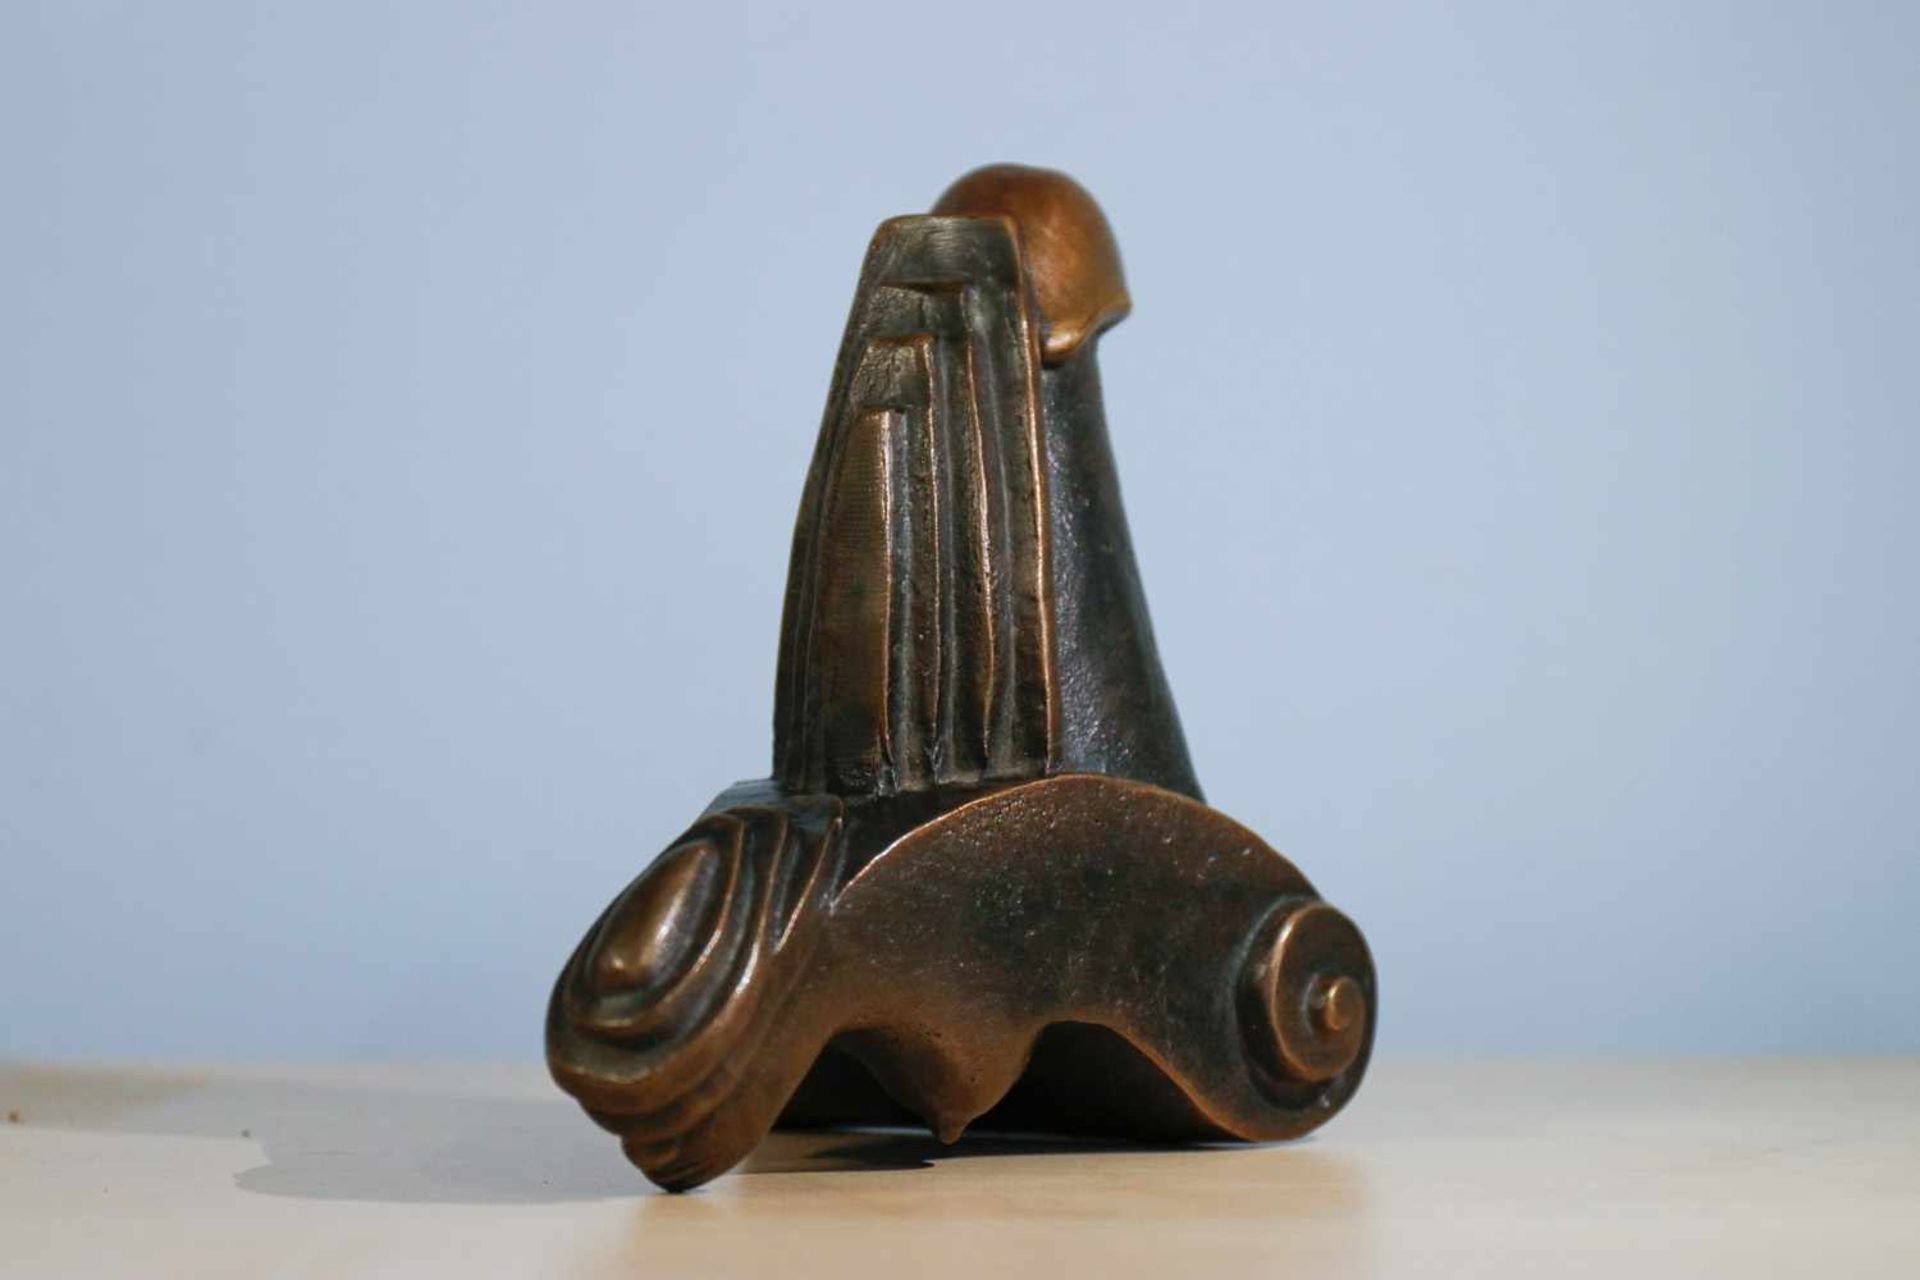 Tom Lehnigk, "Engel" Bronze 0/50, 2006, Erotika, 10 x 13,5 x 14 cm- - -22.50 % buyer's premium on - Image 3 of 5